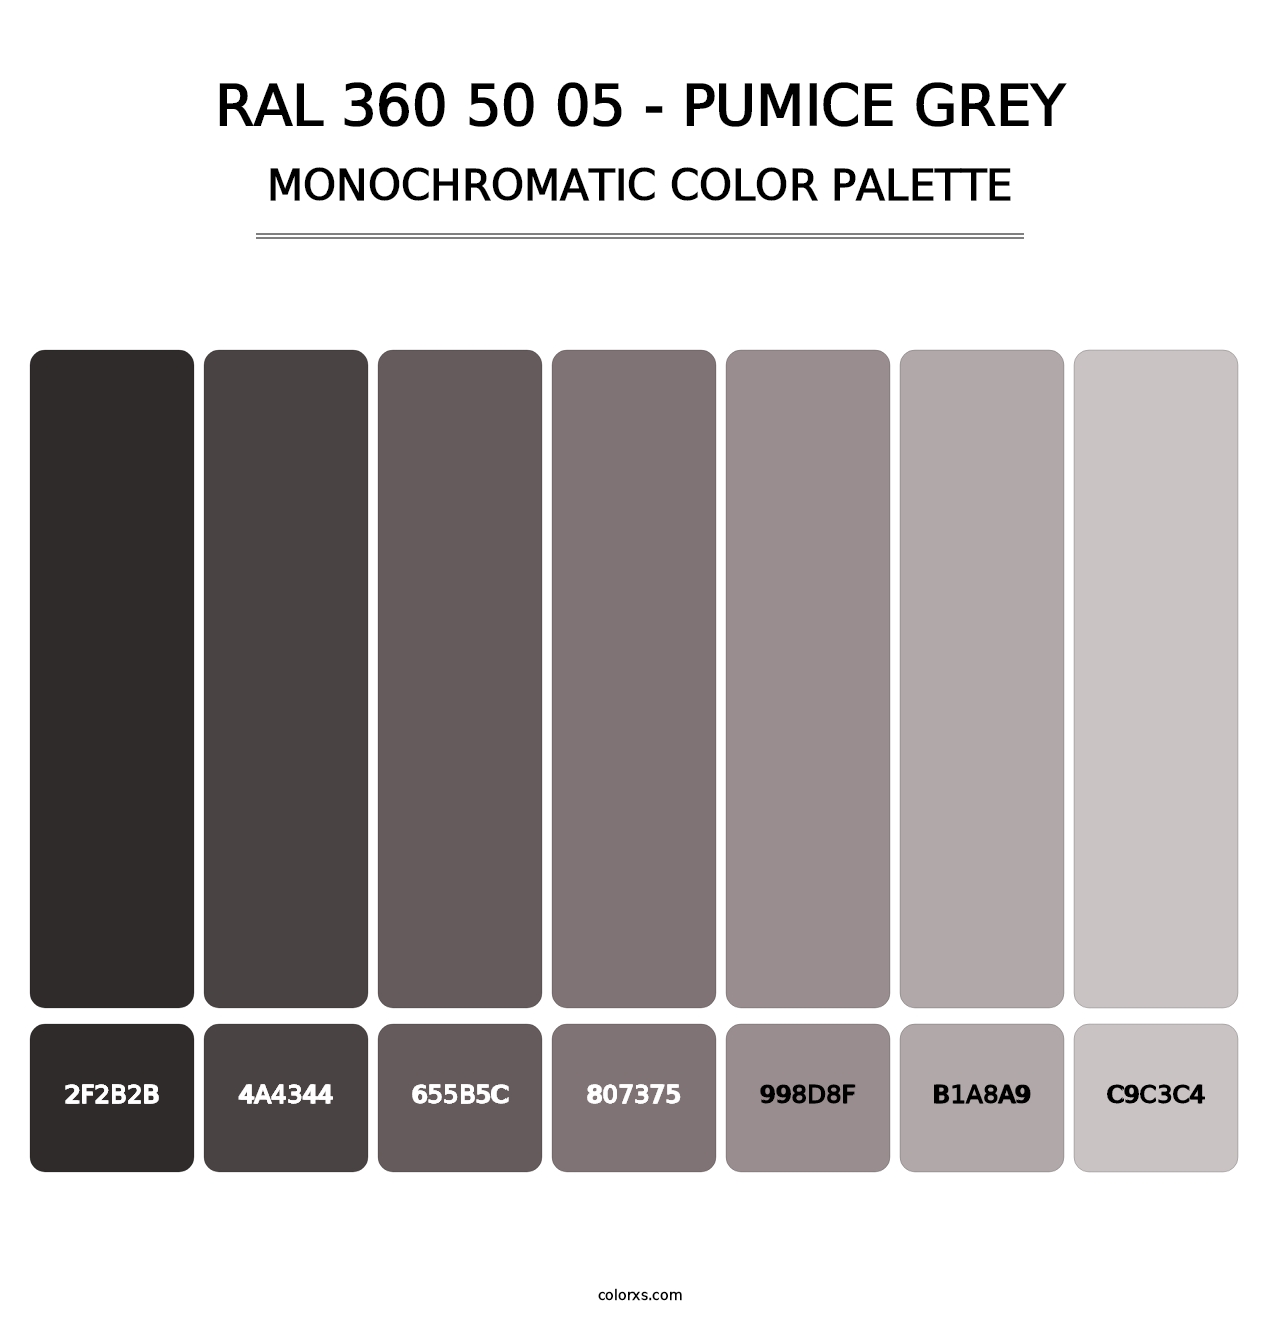 RAL 360 50 05 - Pumice Grey - Monochromatic Color Palette